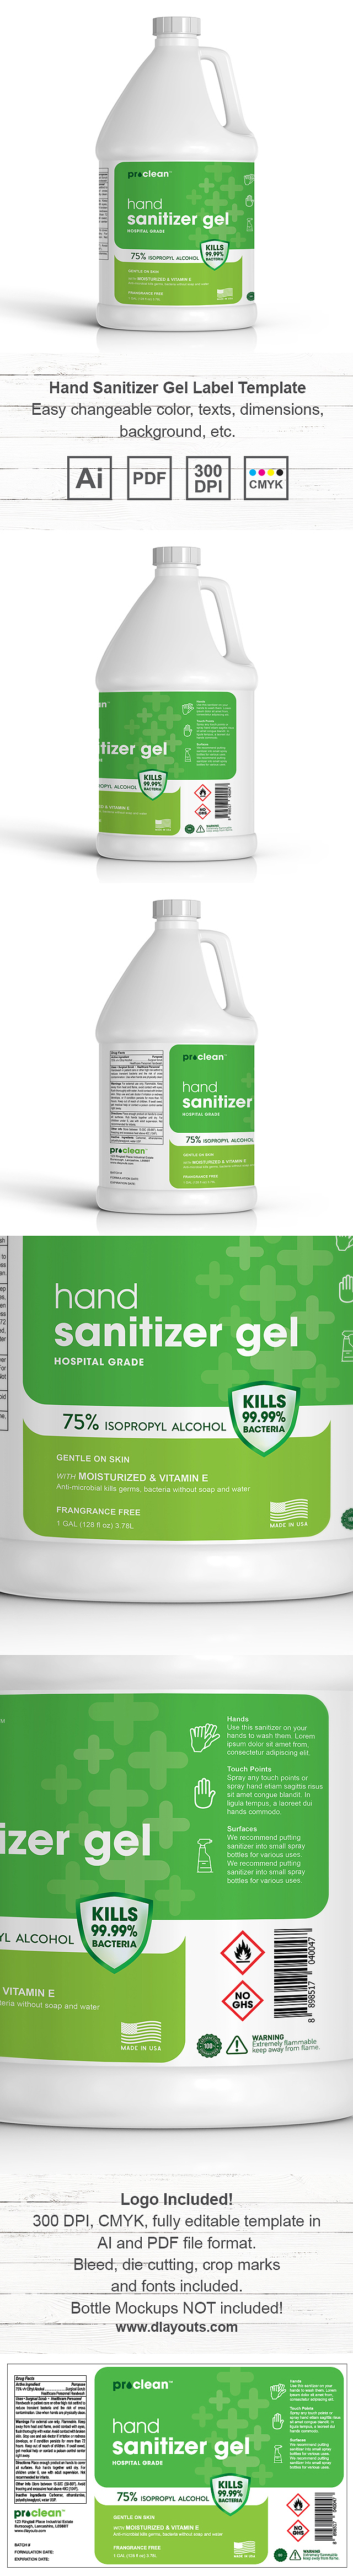 Hand Sanitizer Gel Label Template